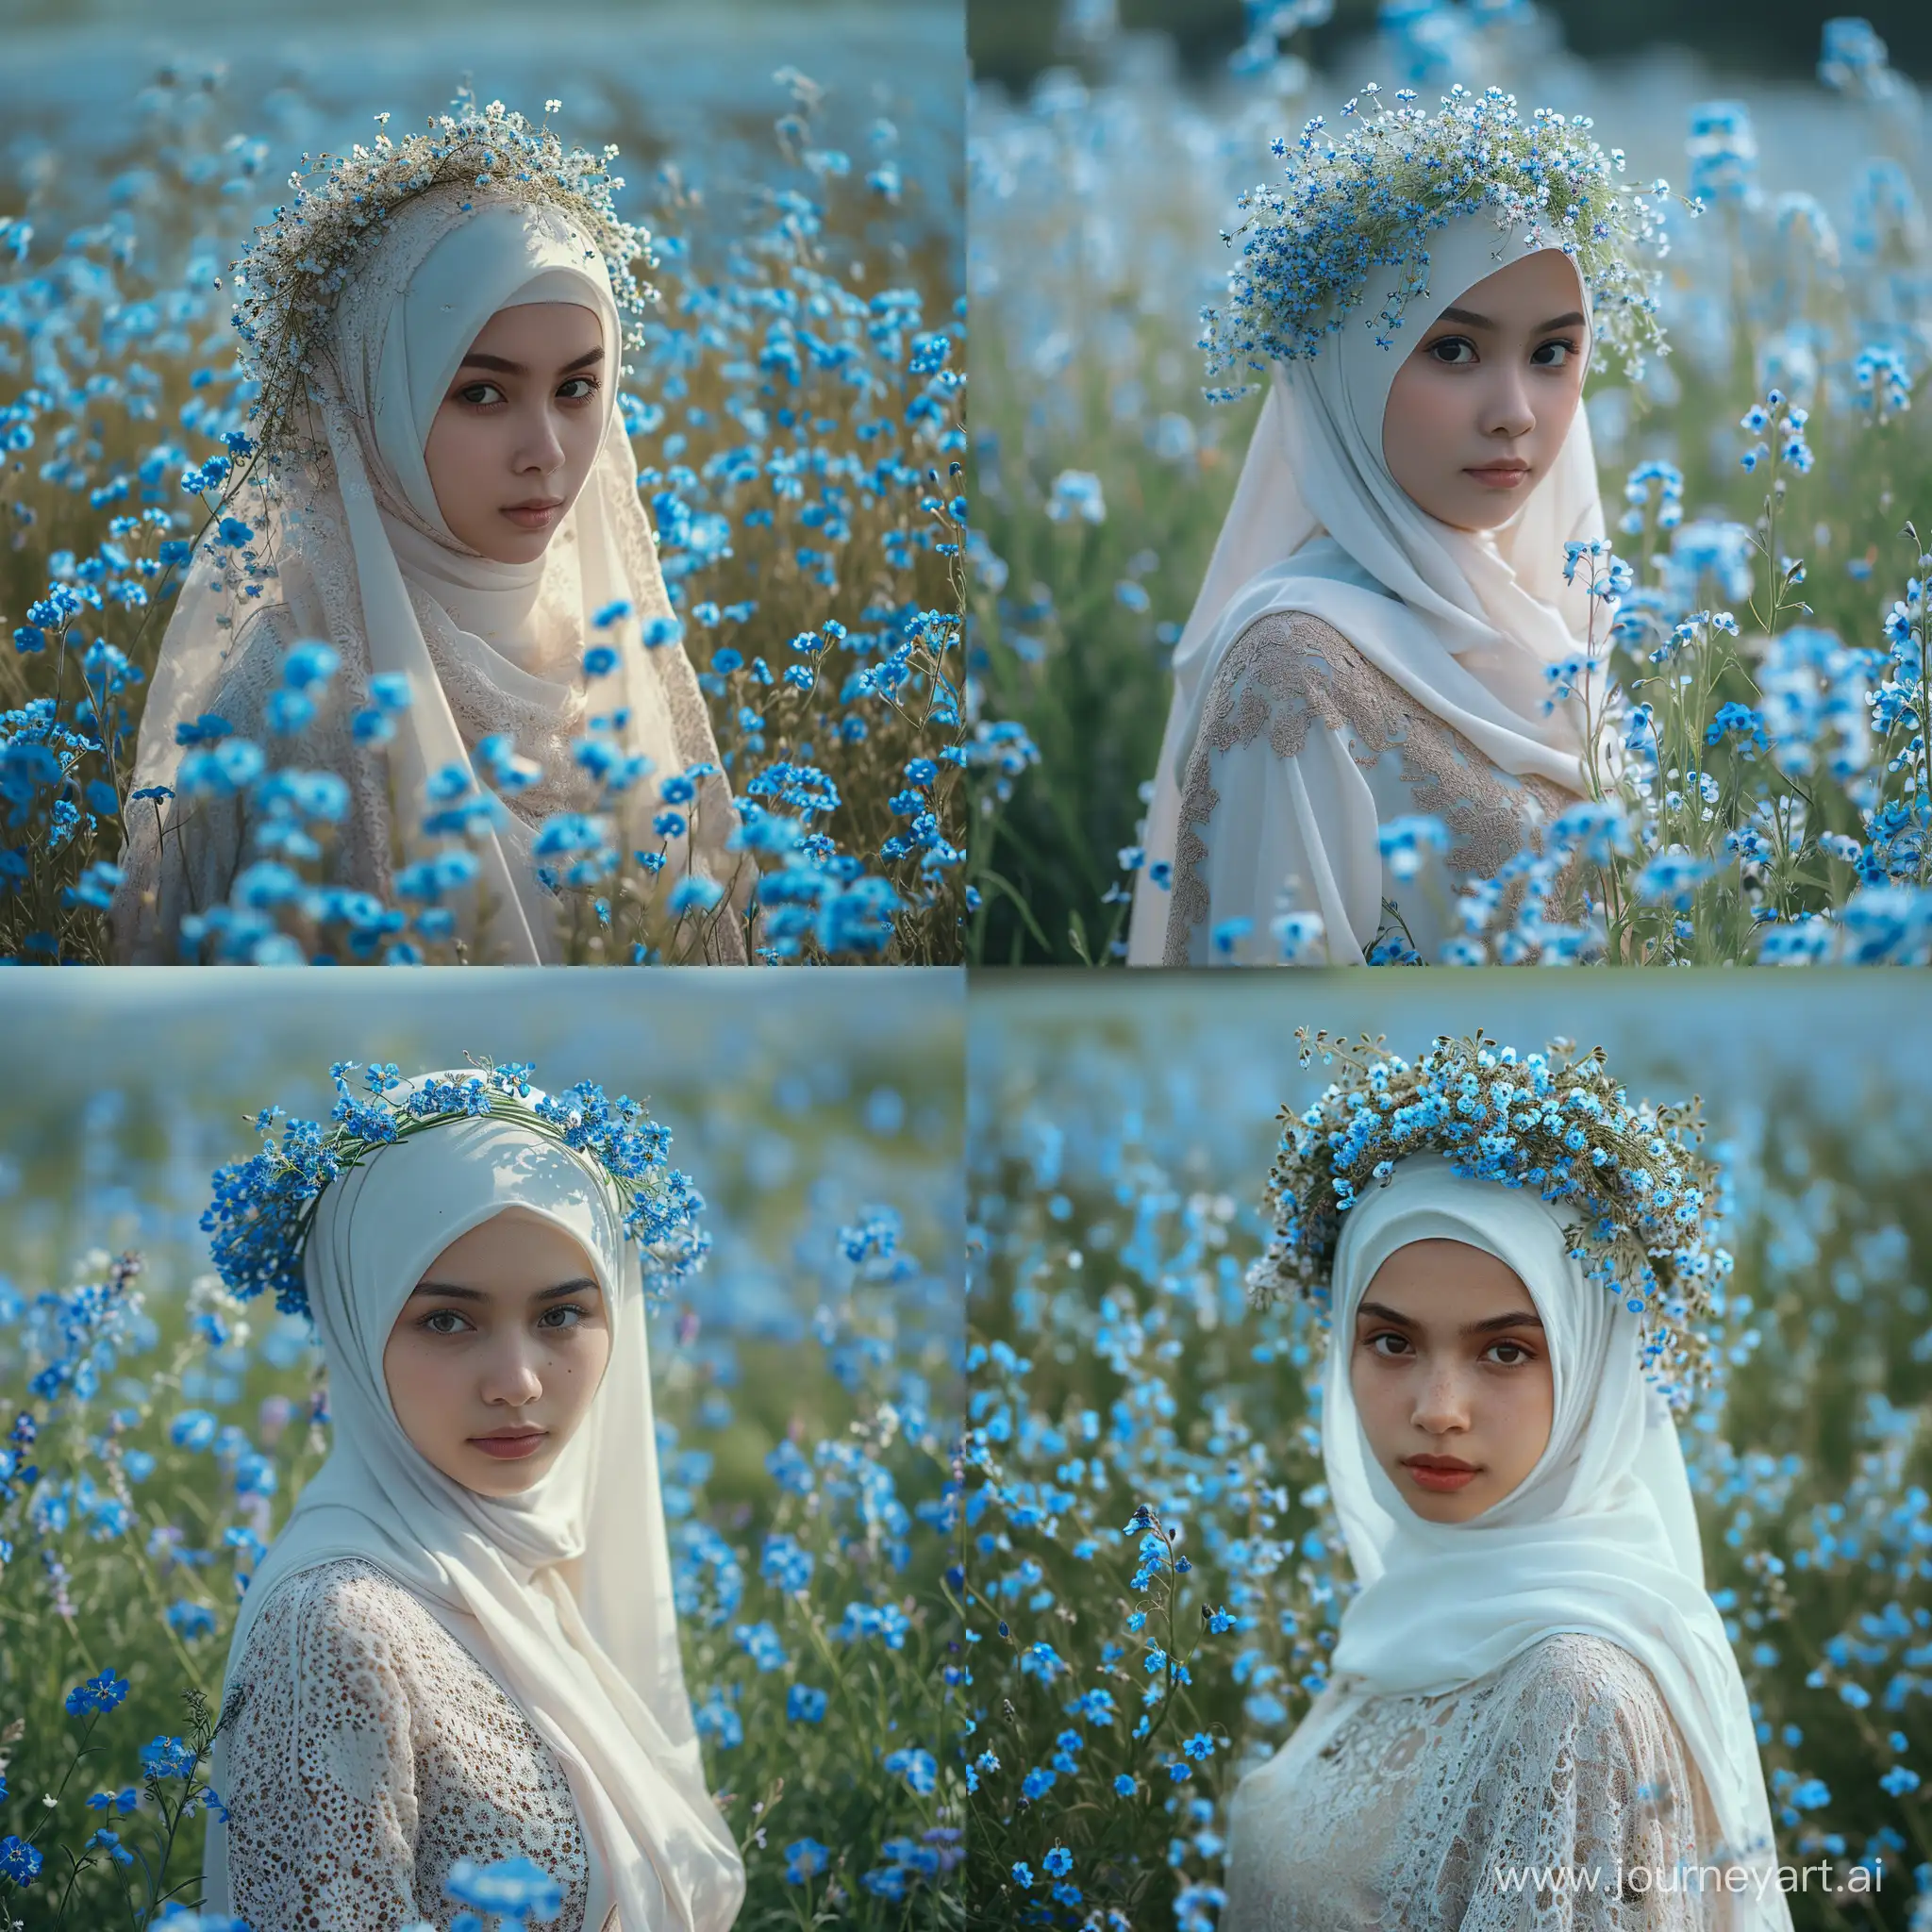 Sundanese-Girl-in-Elegant-White-Hijab-Dress-Amidst-ForgetMeNots